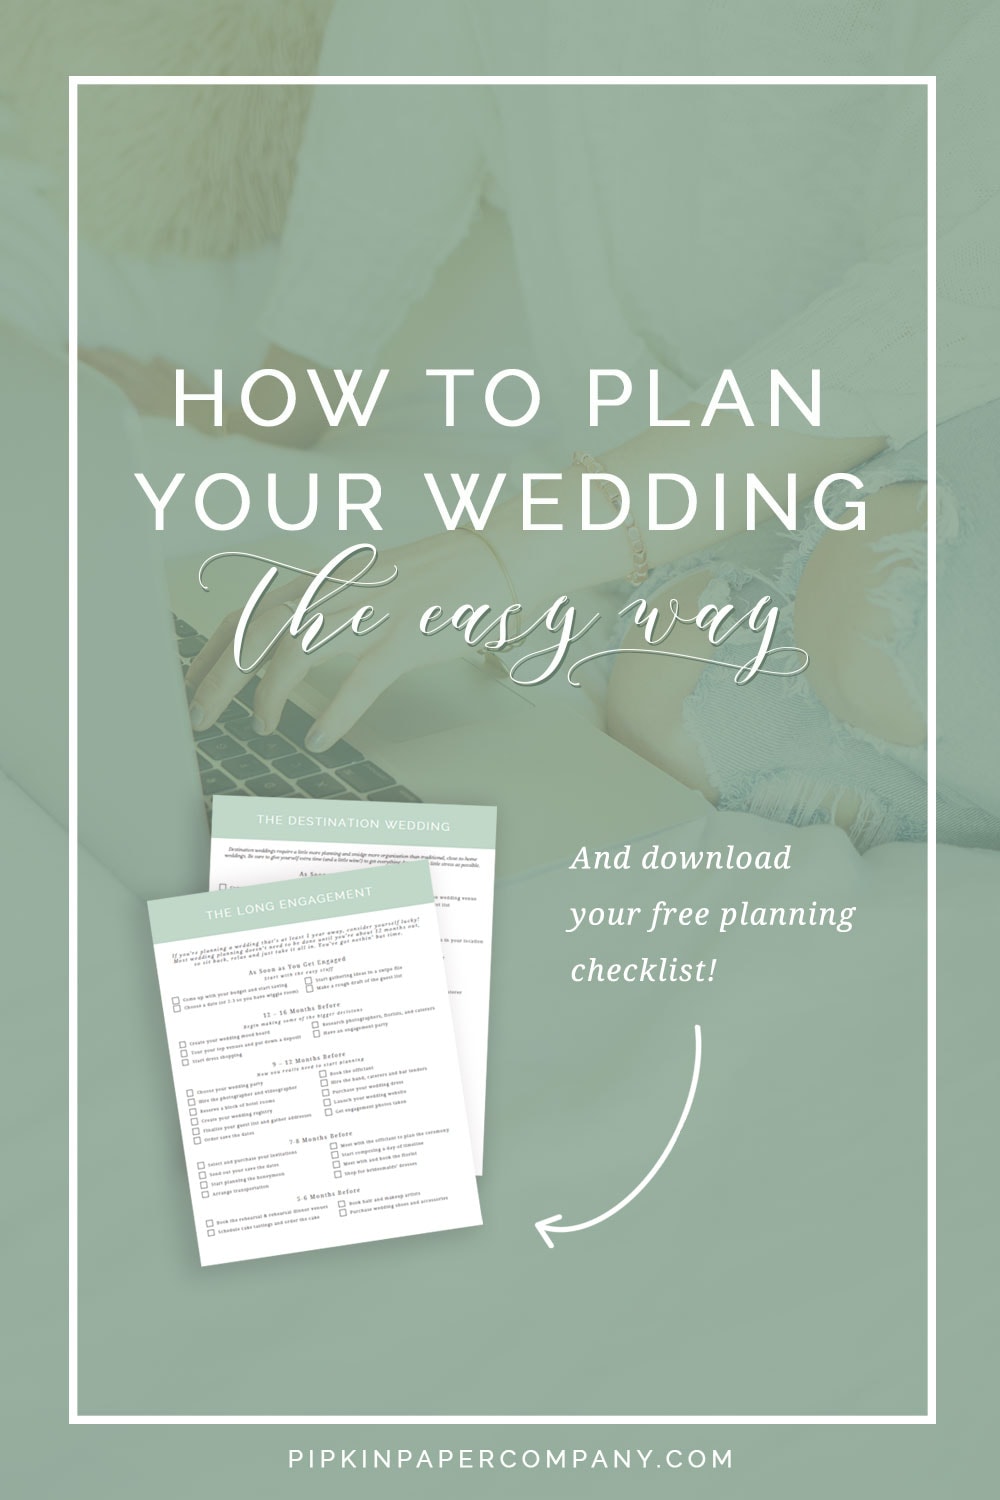 The ultimate wedding planning checklist